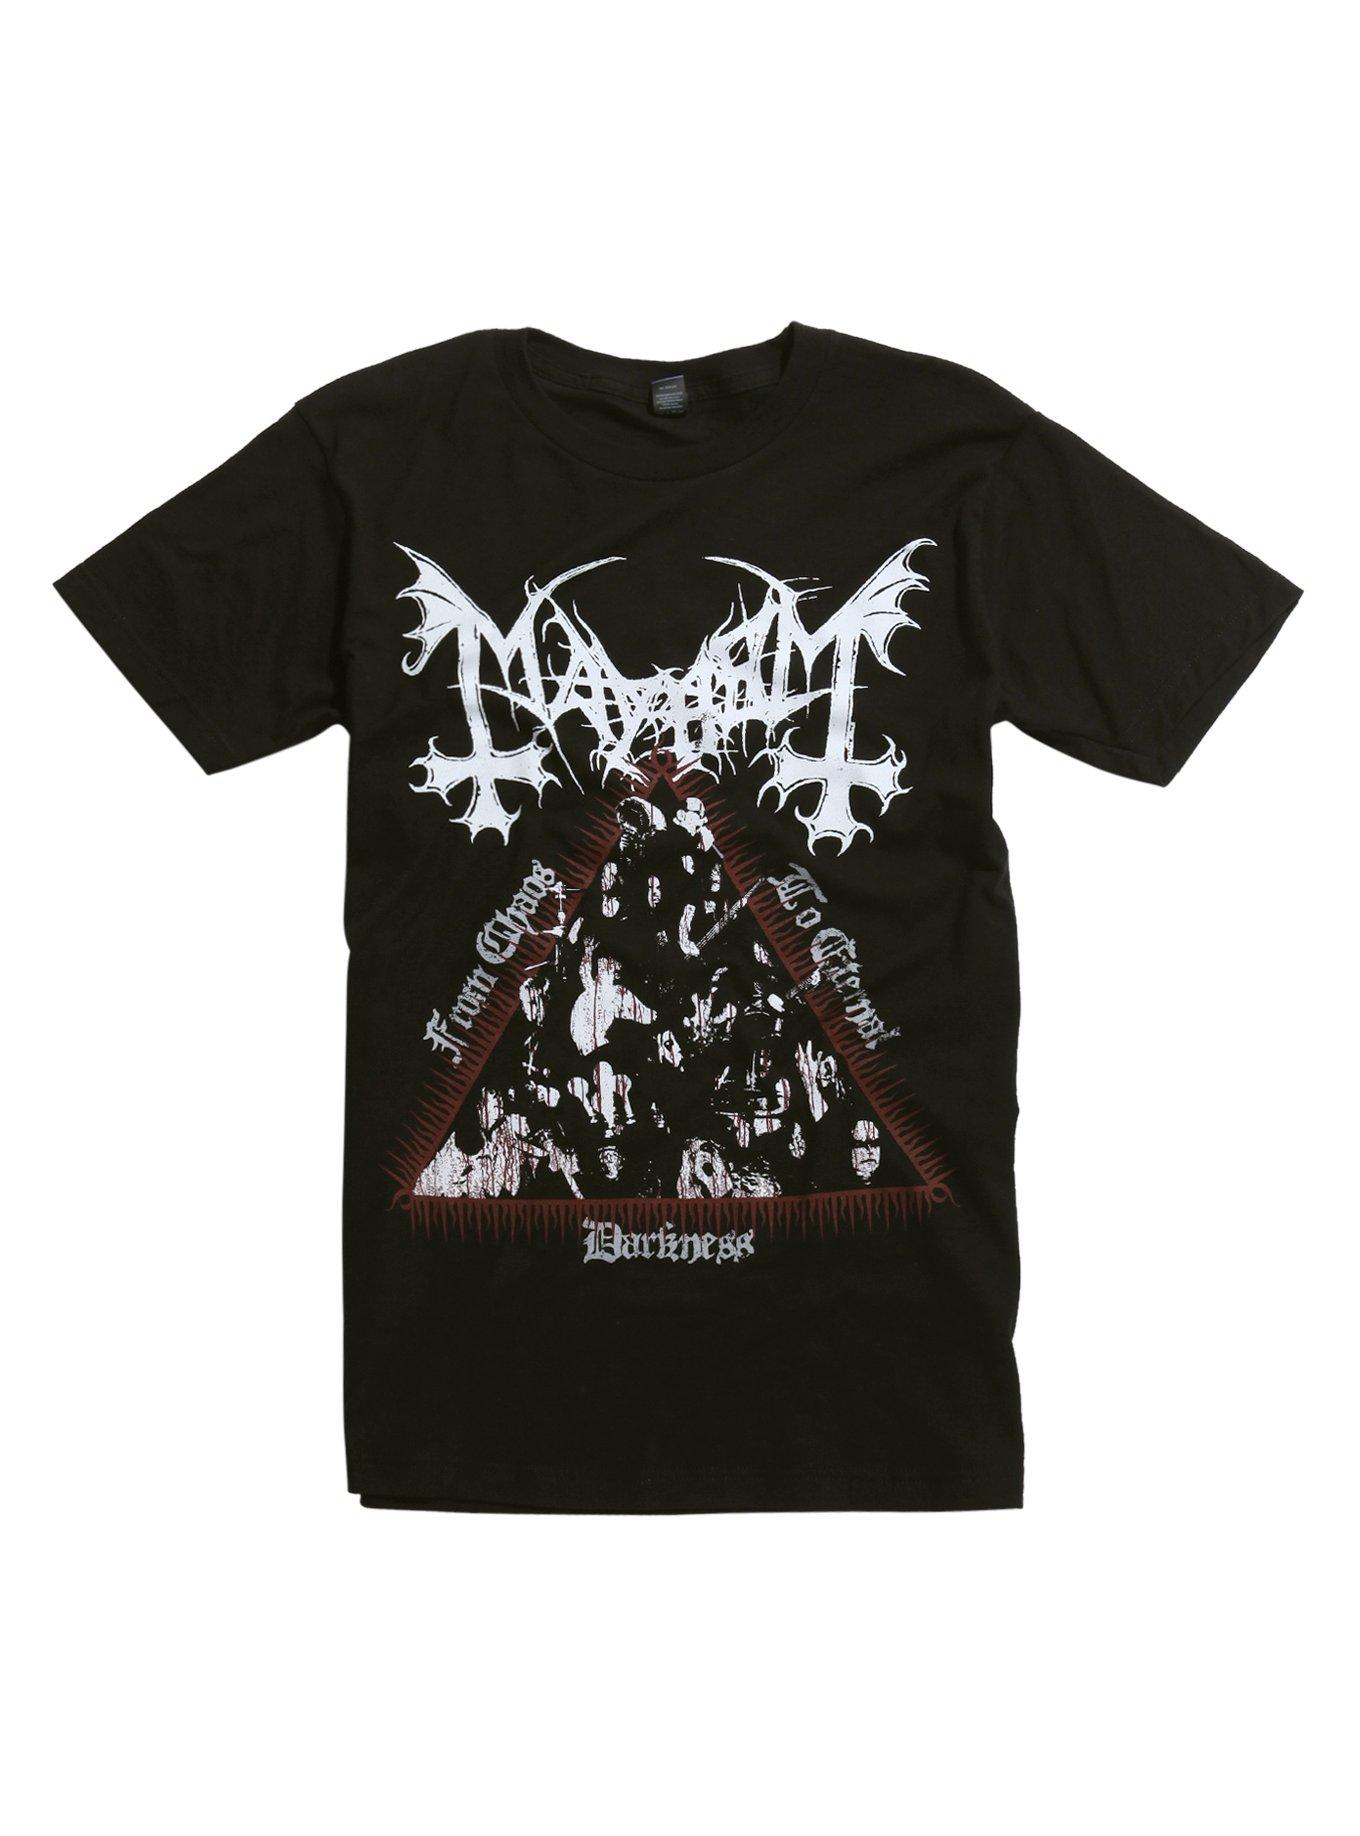 Mayhem From Chaos To Eternal Darkness T-Shirt, BLACK, hi-res